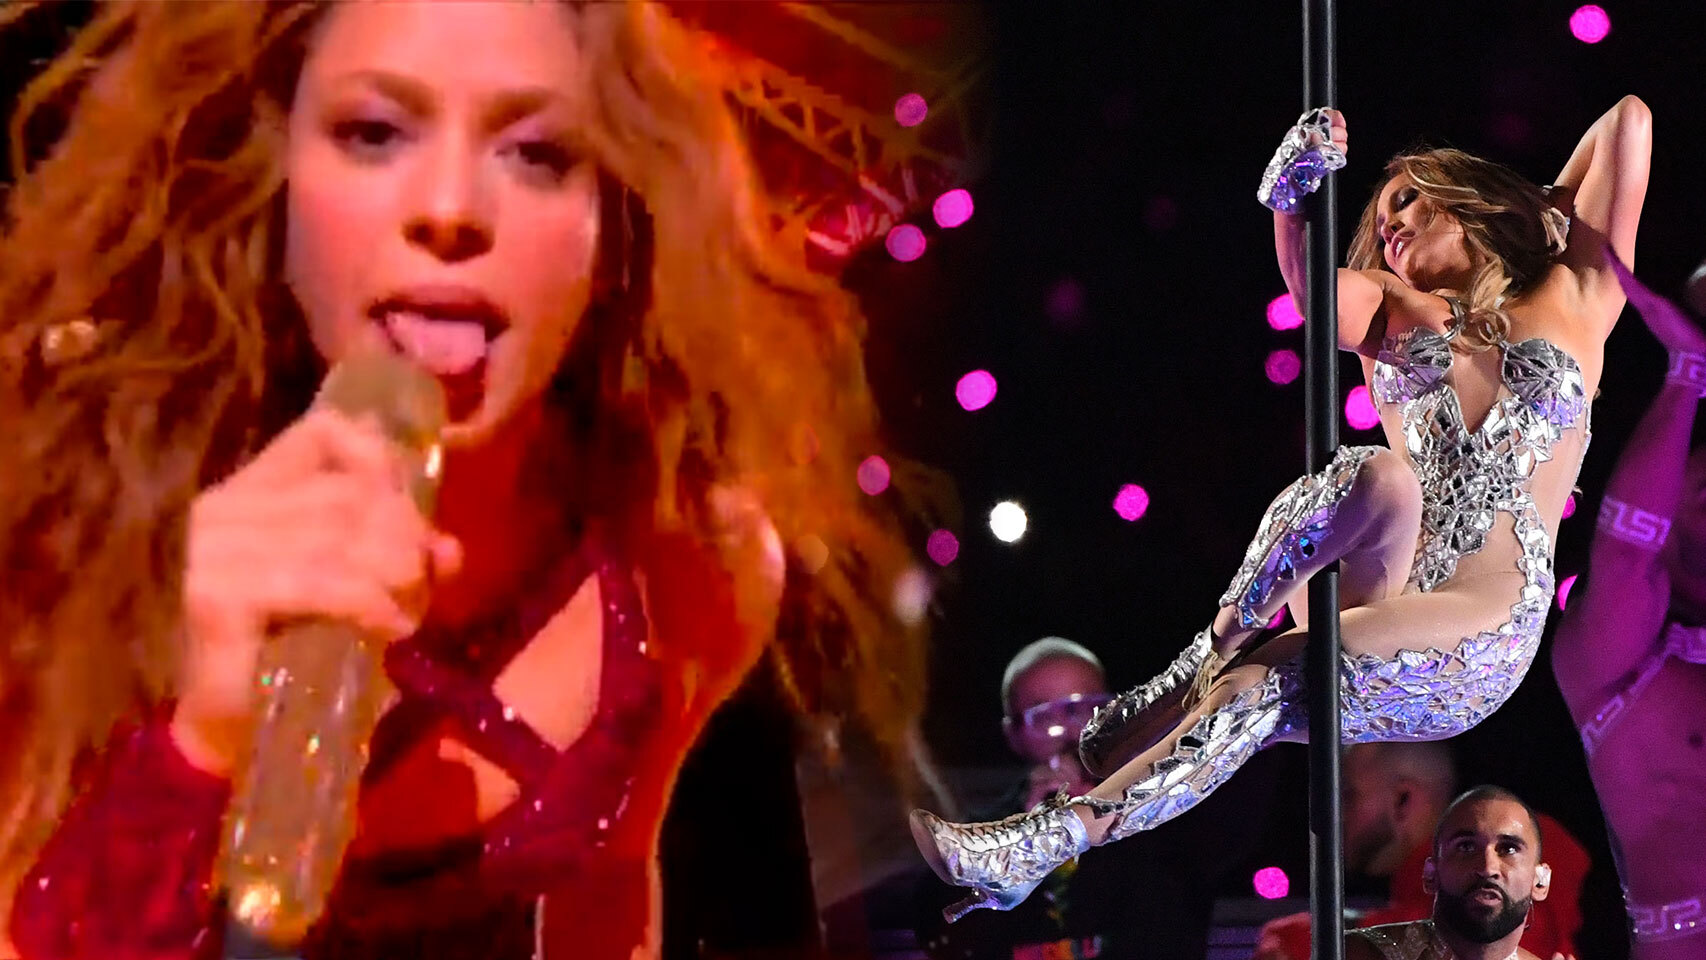 La lengua de Shakira y los looks de Jennifer Lopez, protagonistas de los memes de la Super Bowl